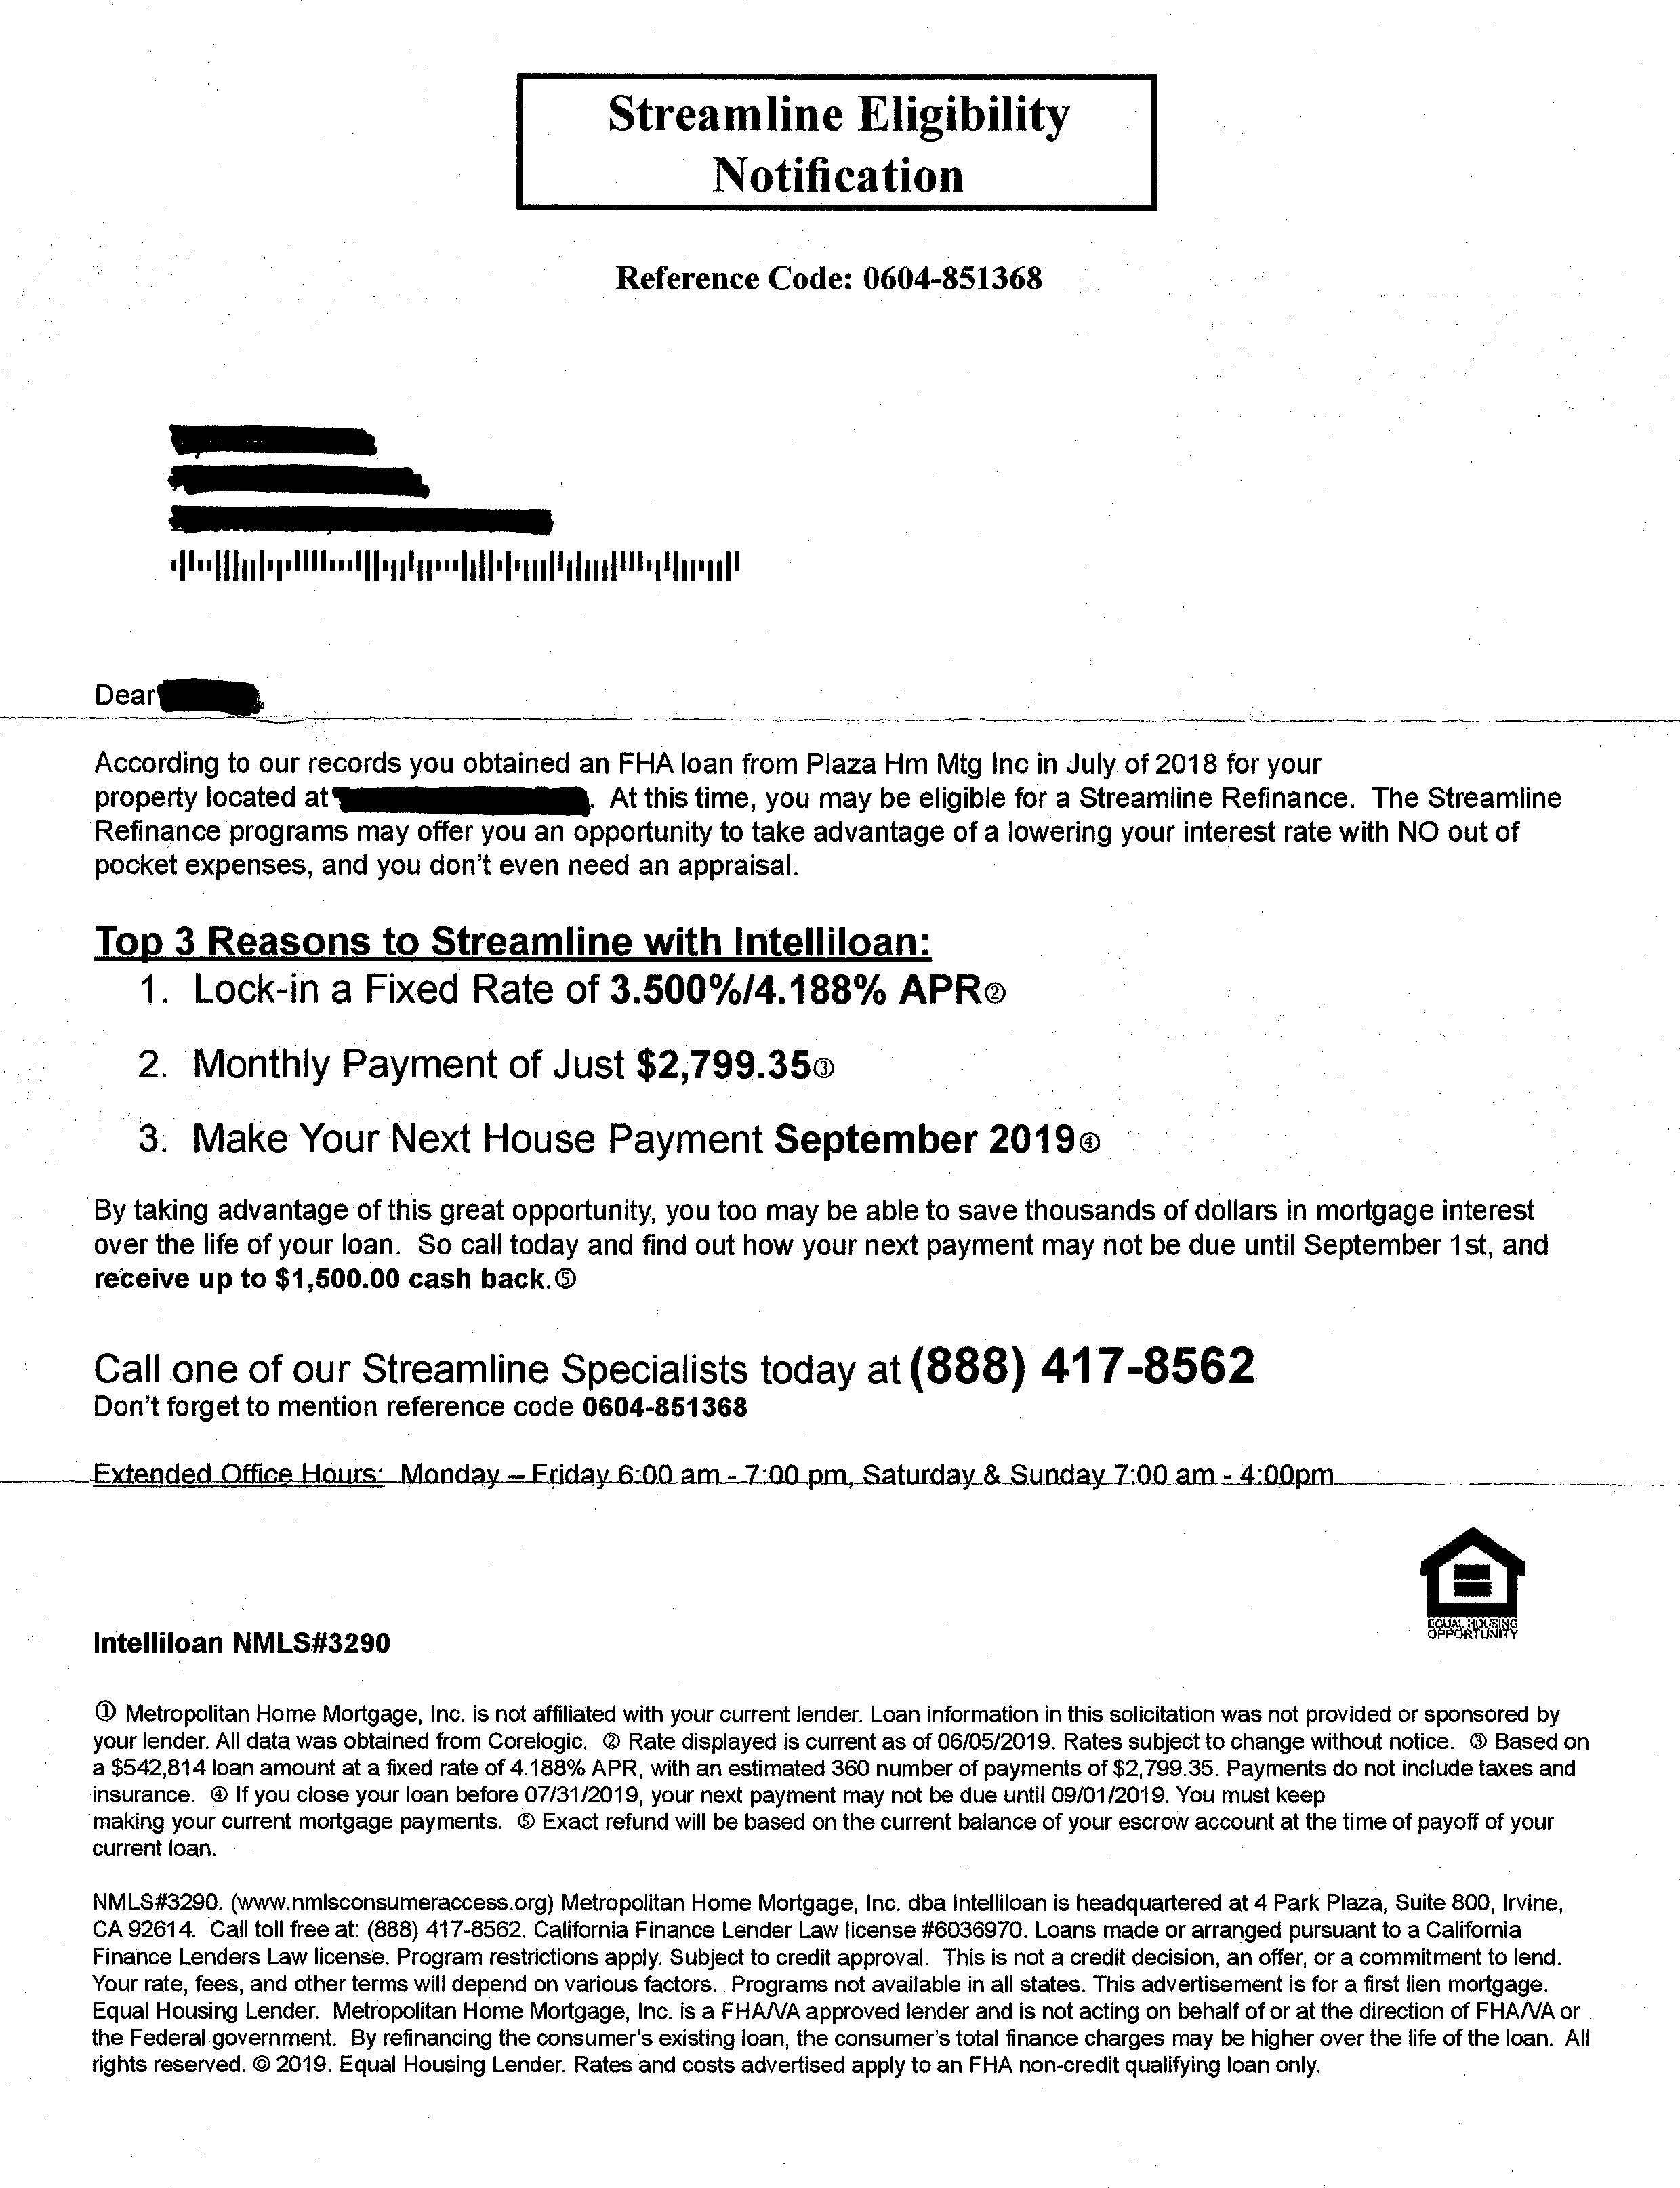 mortgage mailing 15.jpg